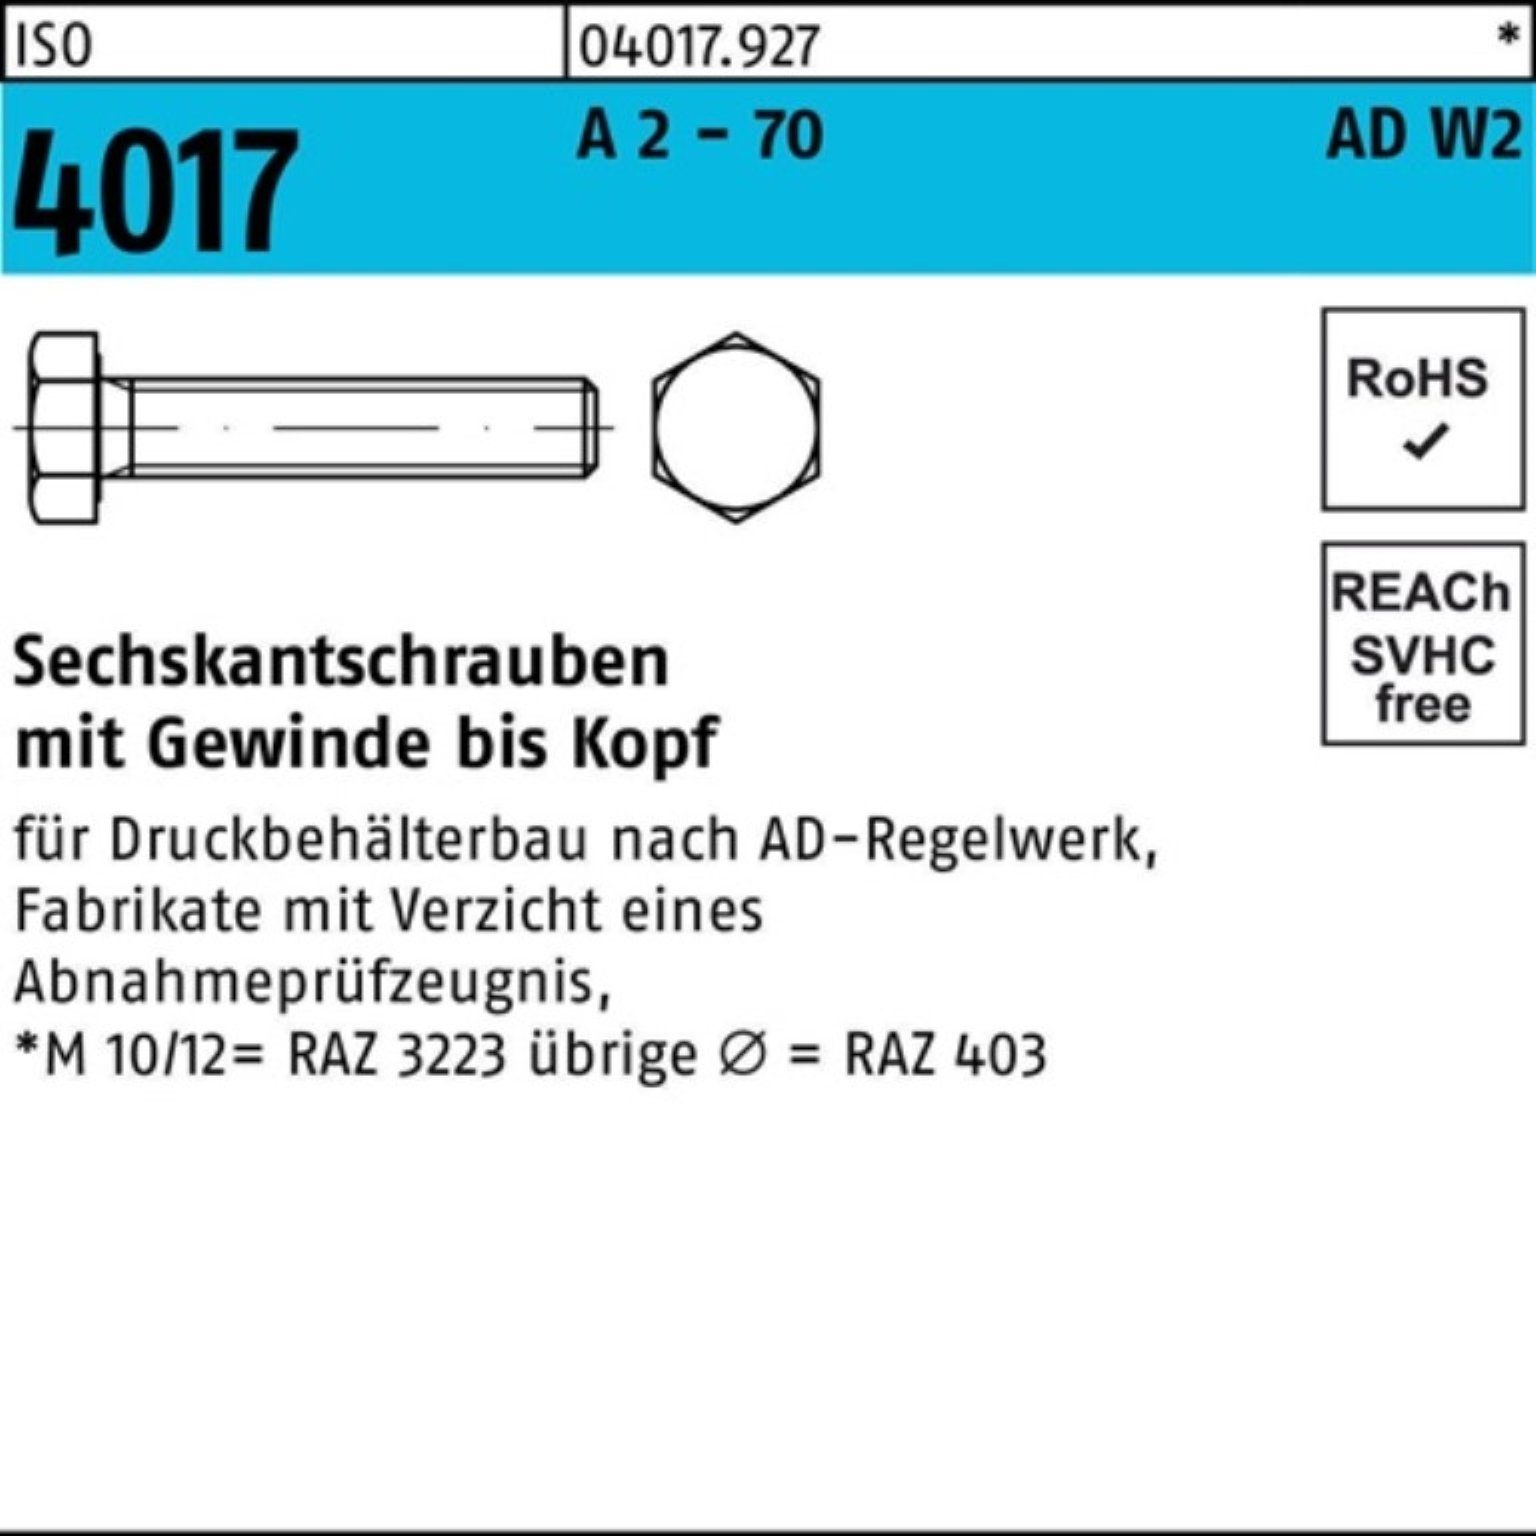 Bufab Sechskantschraube 100er Pack Sechskantschraube ISO 4017 VG M10x 35 A 2 - 70 AD-W2 100 St